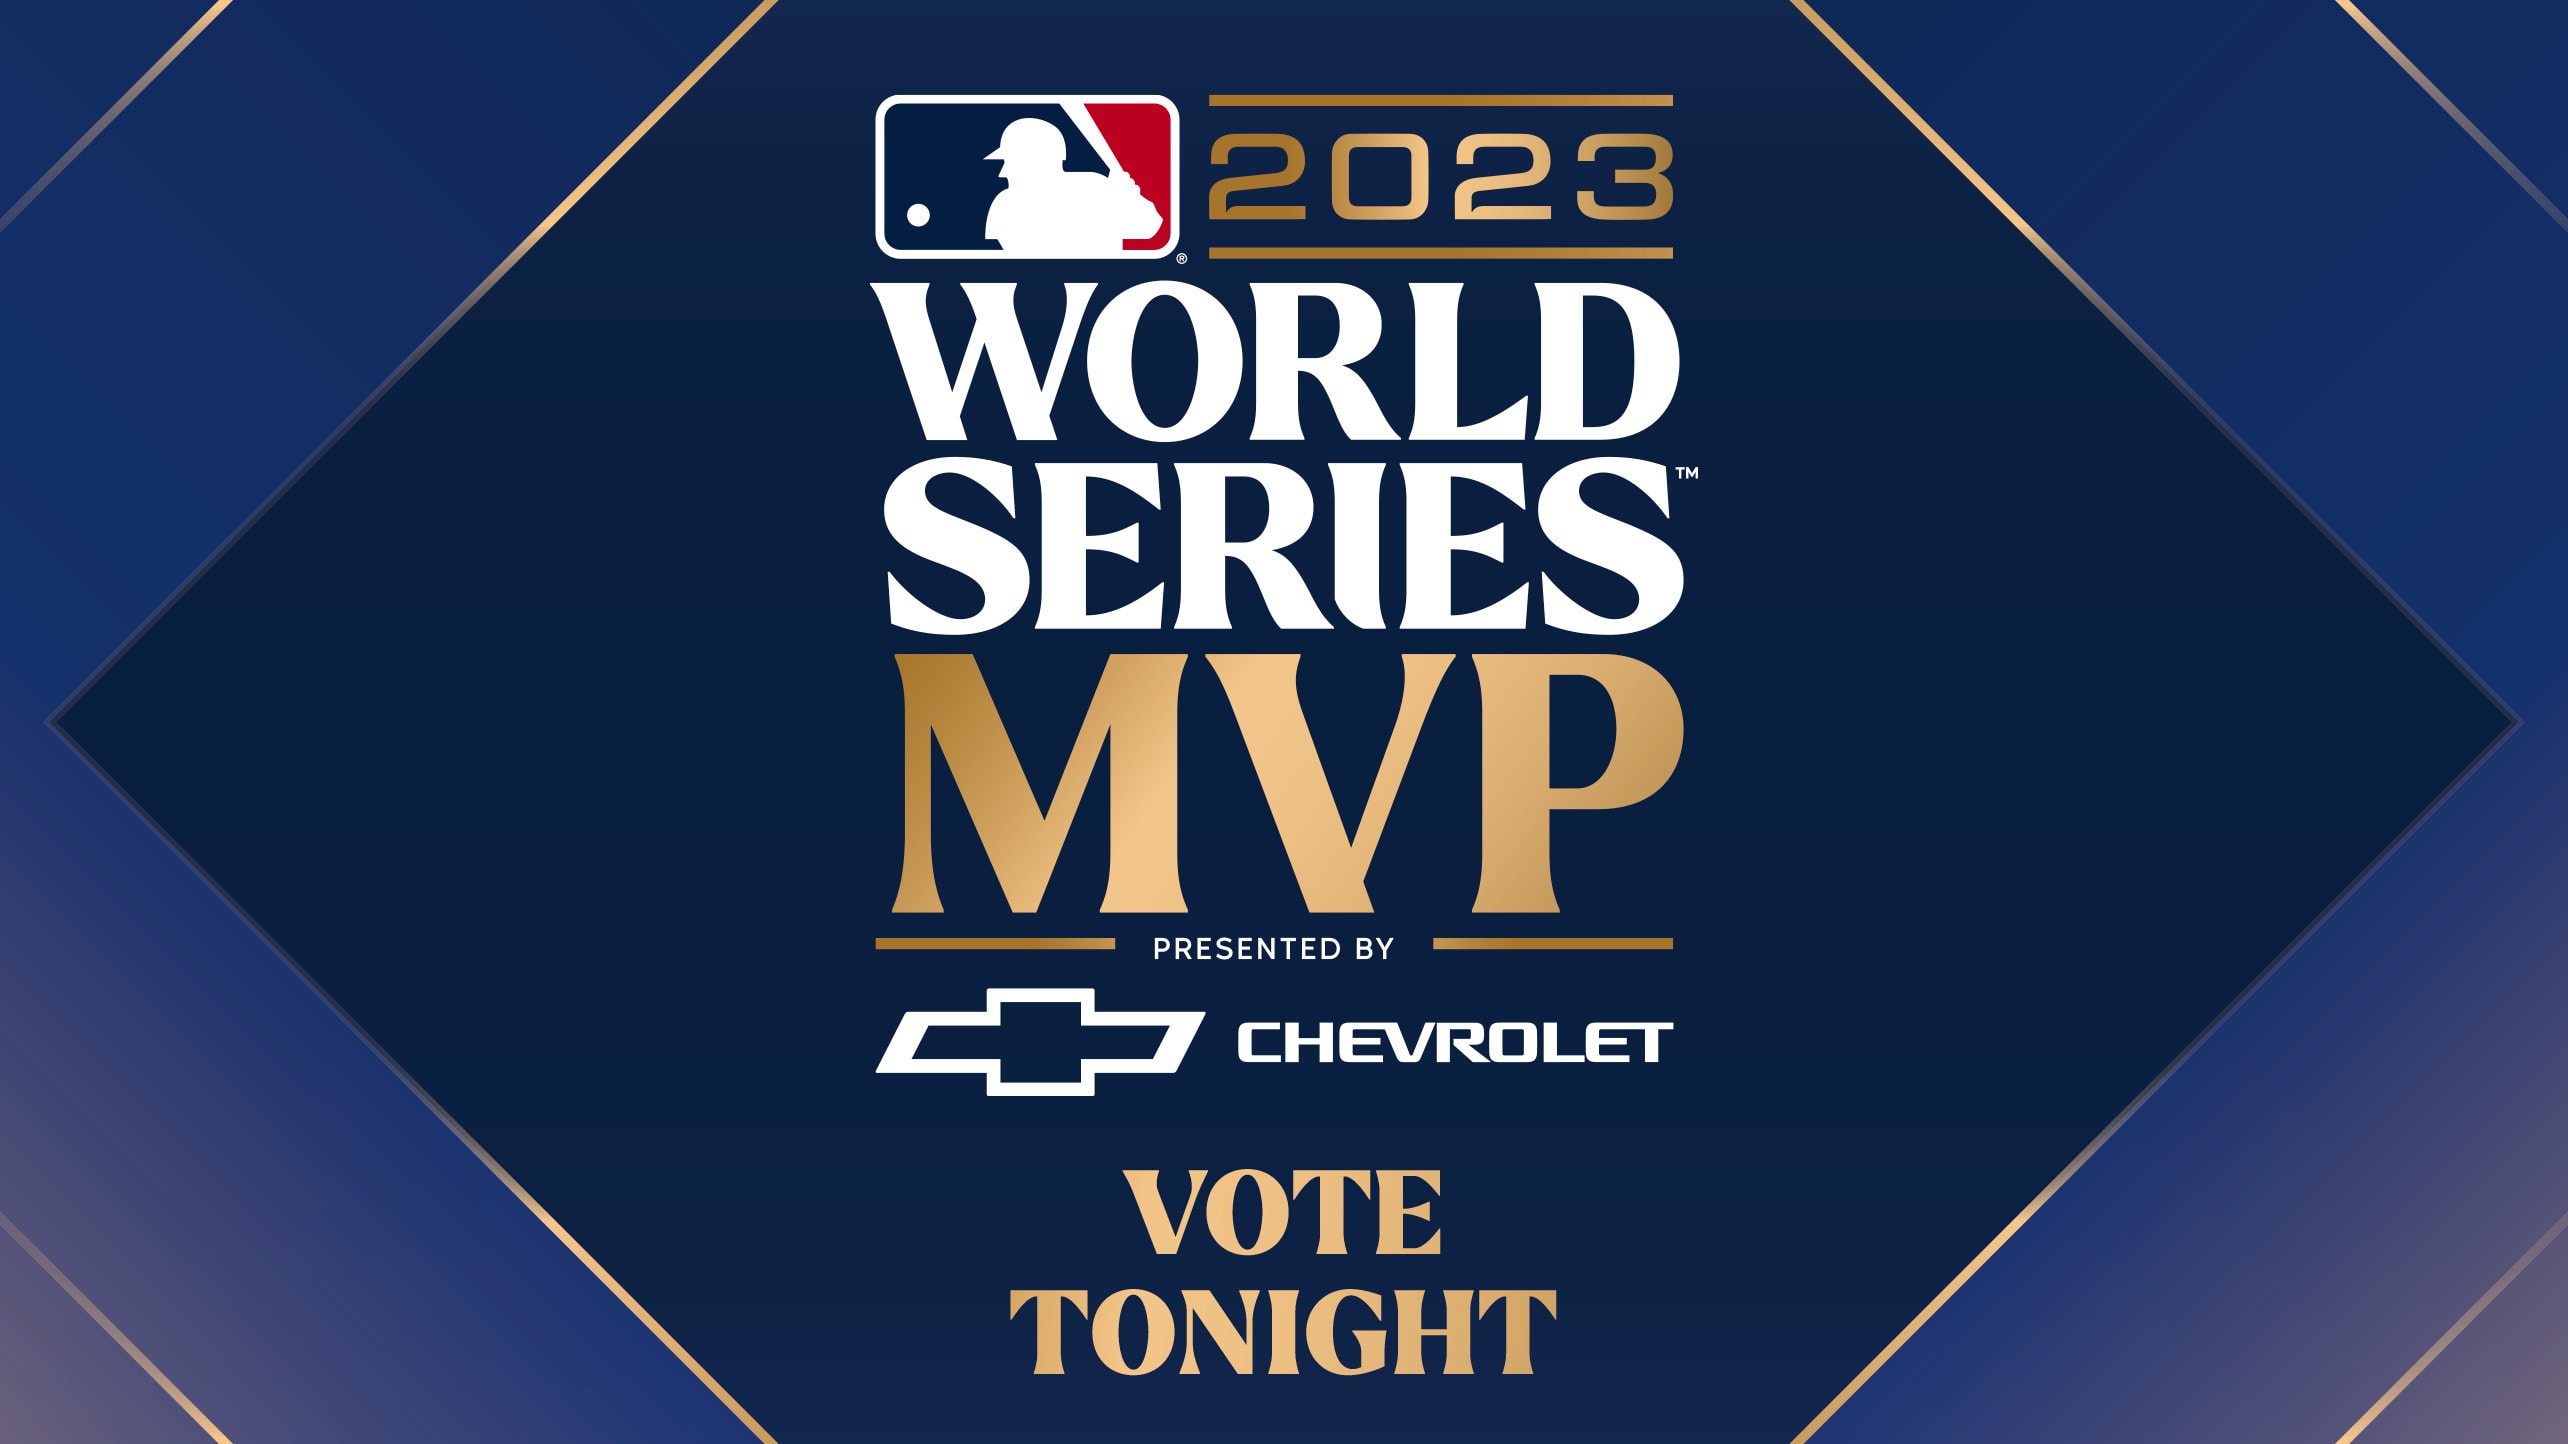 Vote for World Series MVP tonight